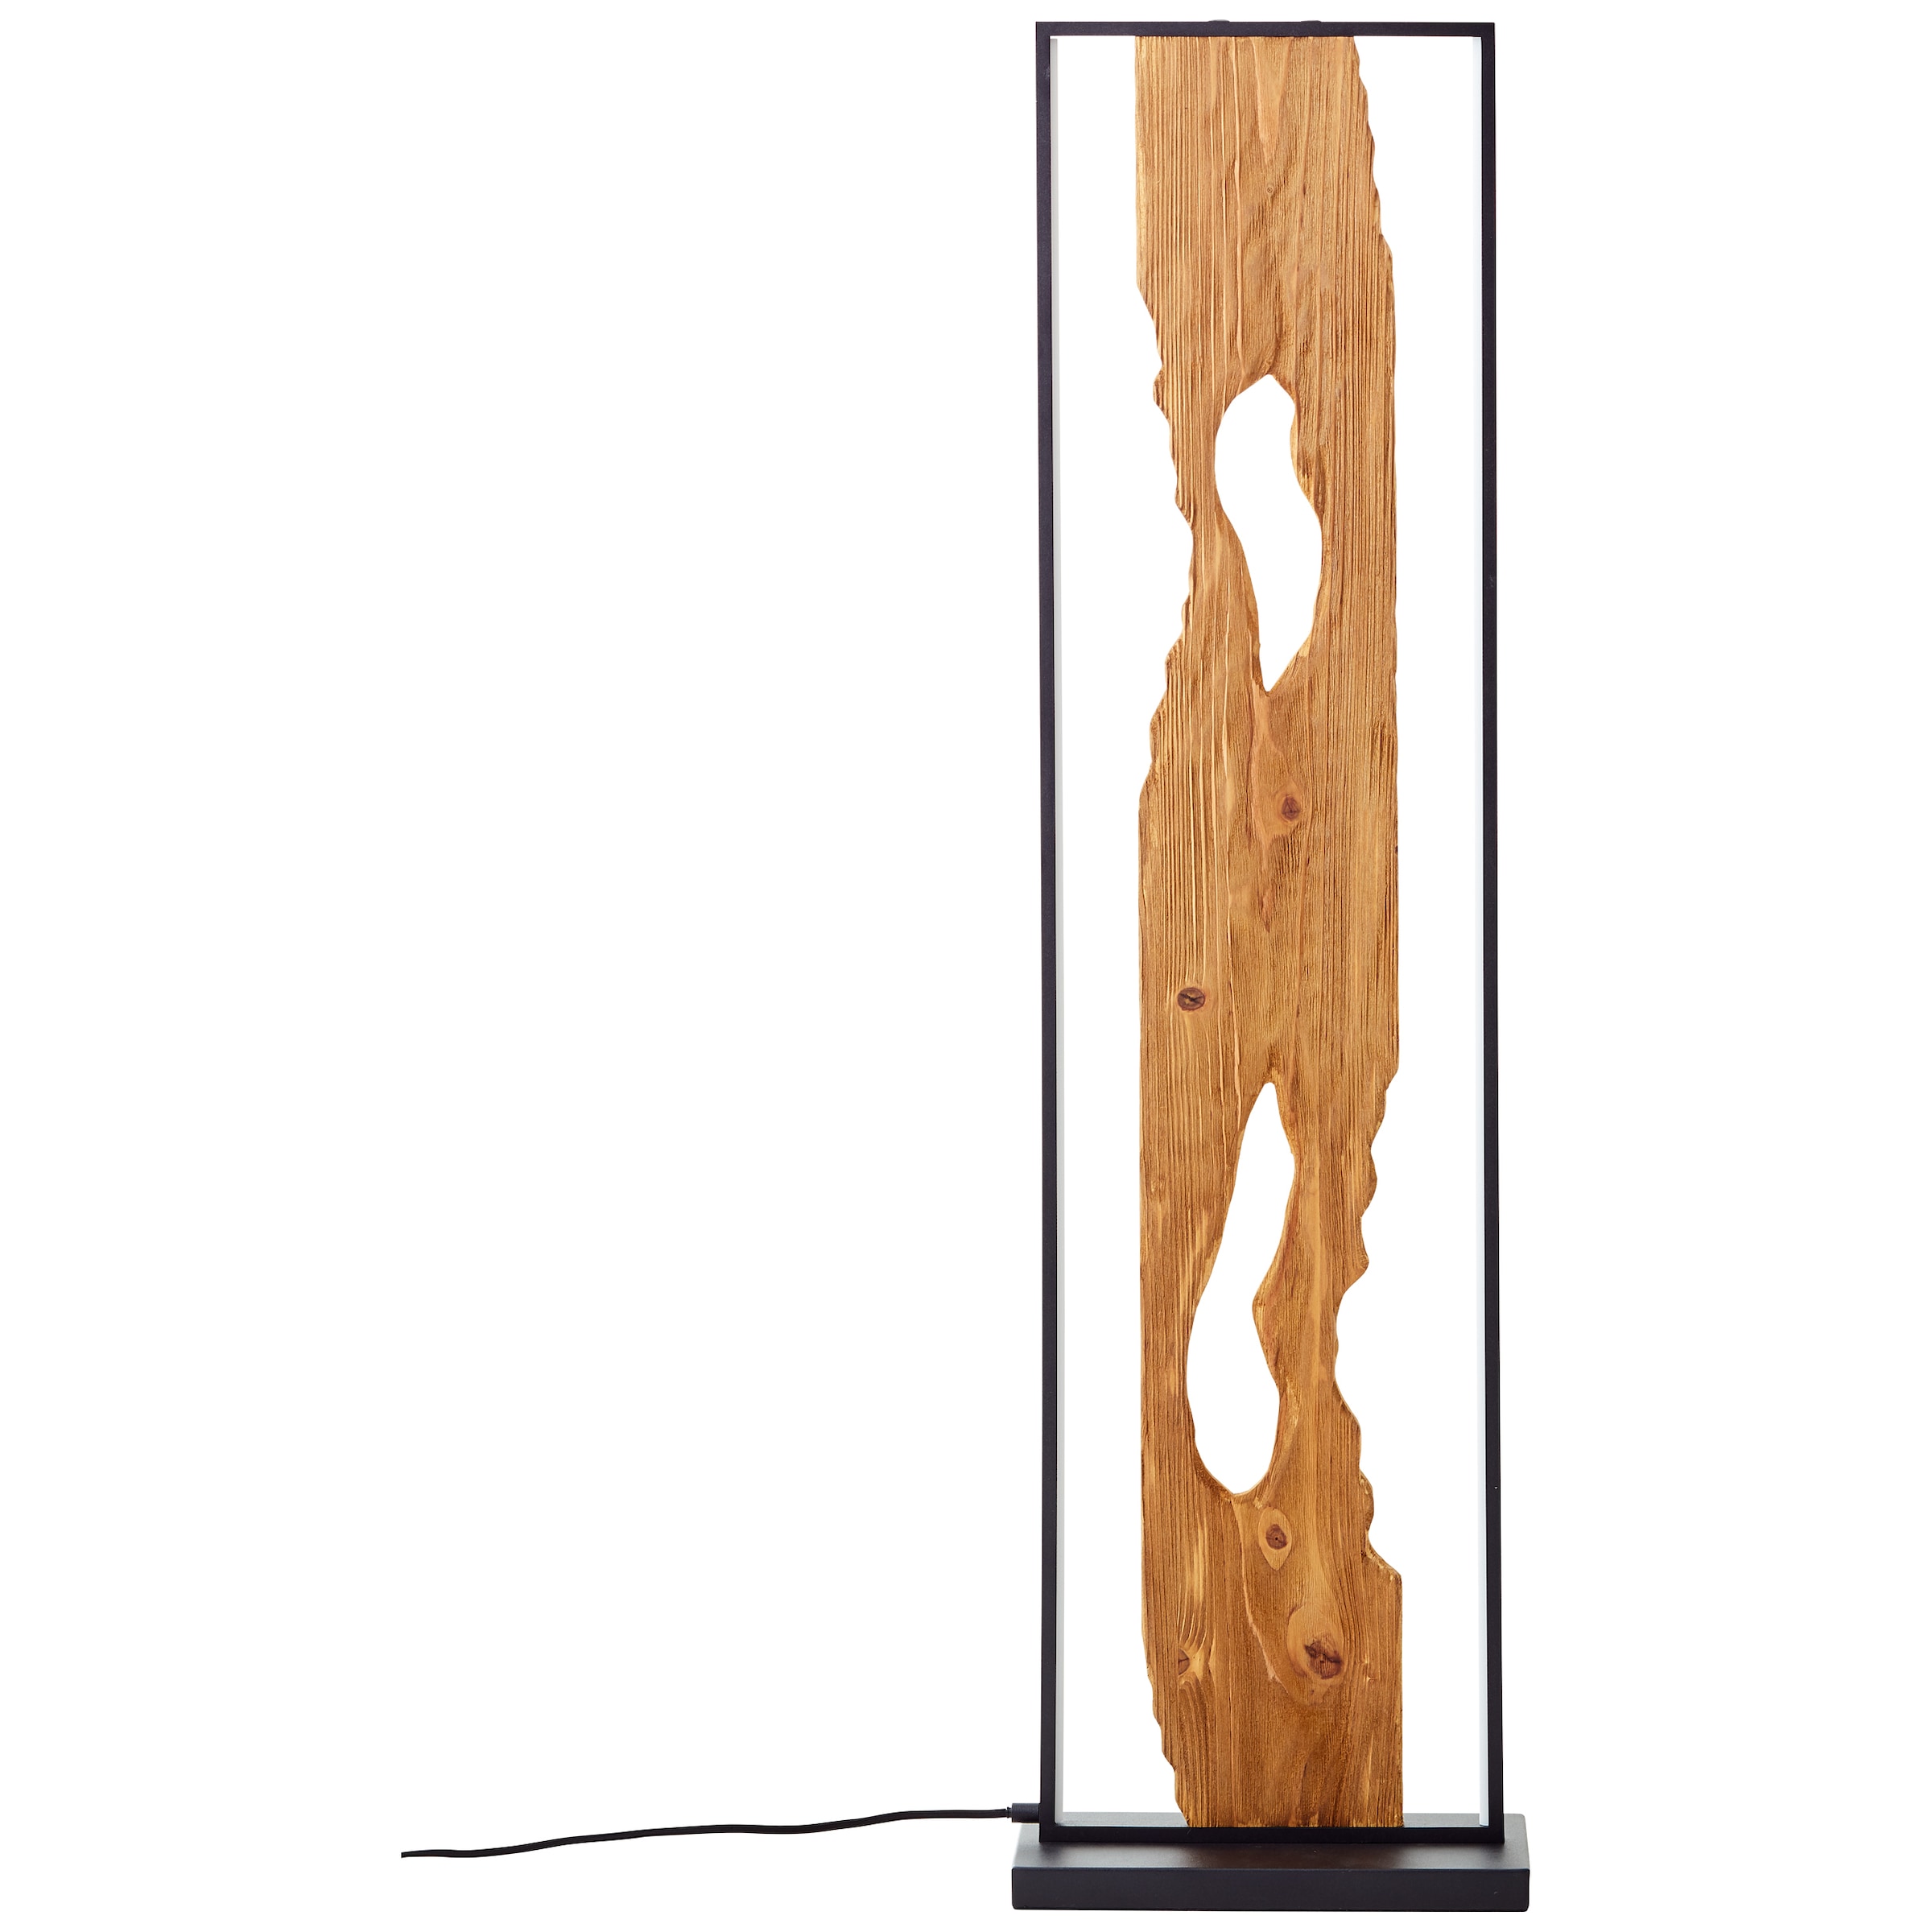 Brilliant LED Stehlampe »Chaumont«, Höhe 120 cm, 2300 lm,  Aluminium/Metall/Holz, schwarz/holz kaufen online bei OTTO